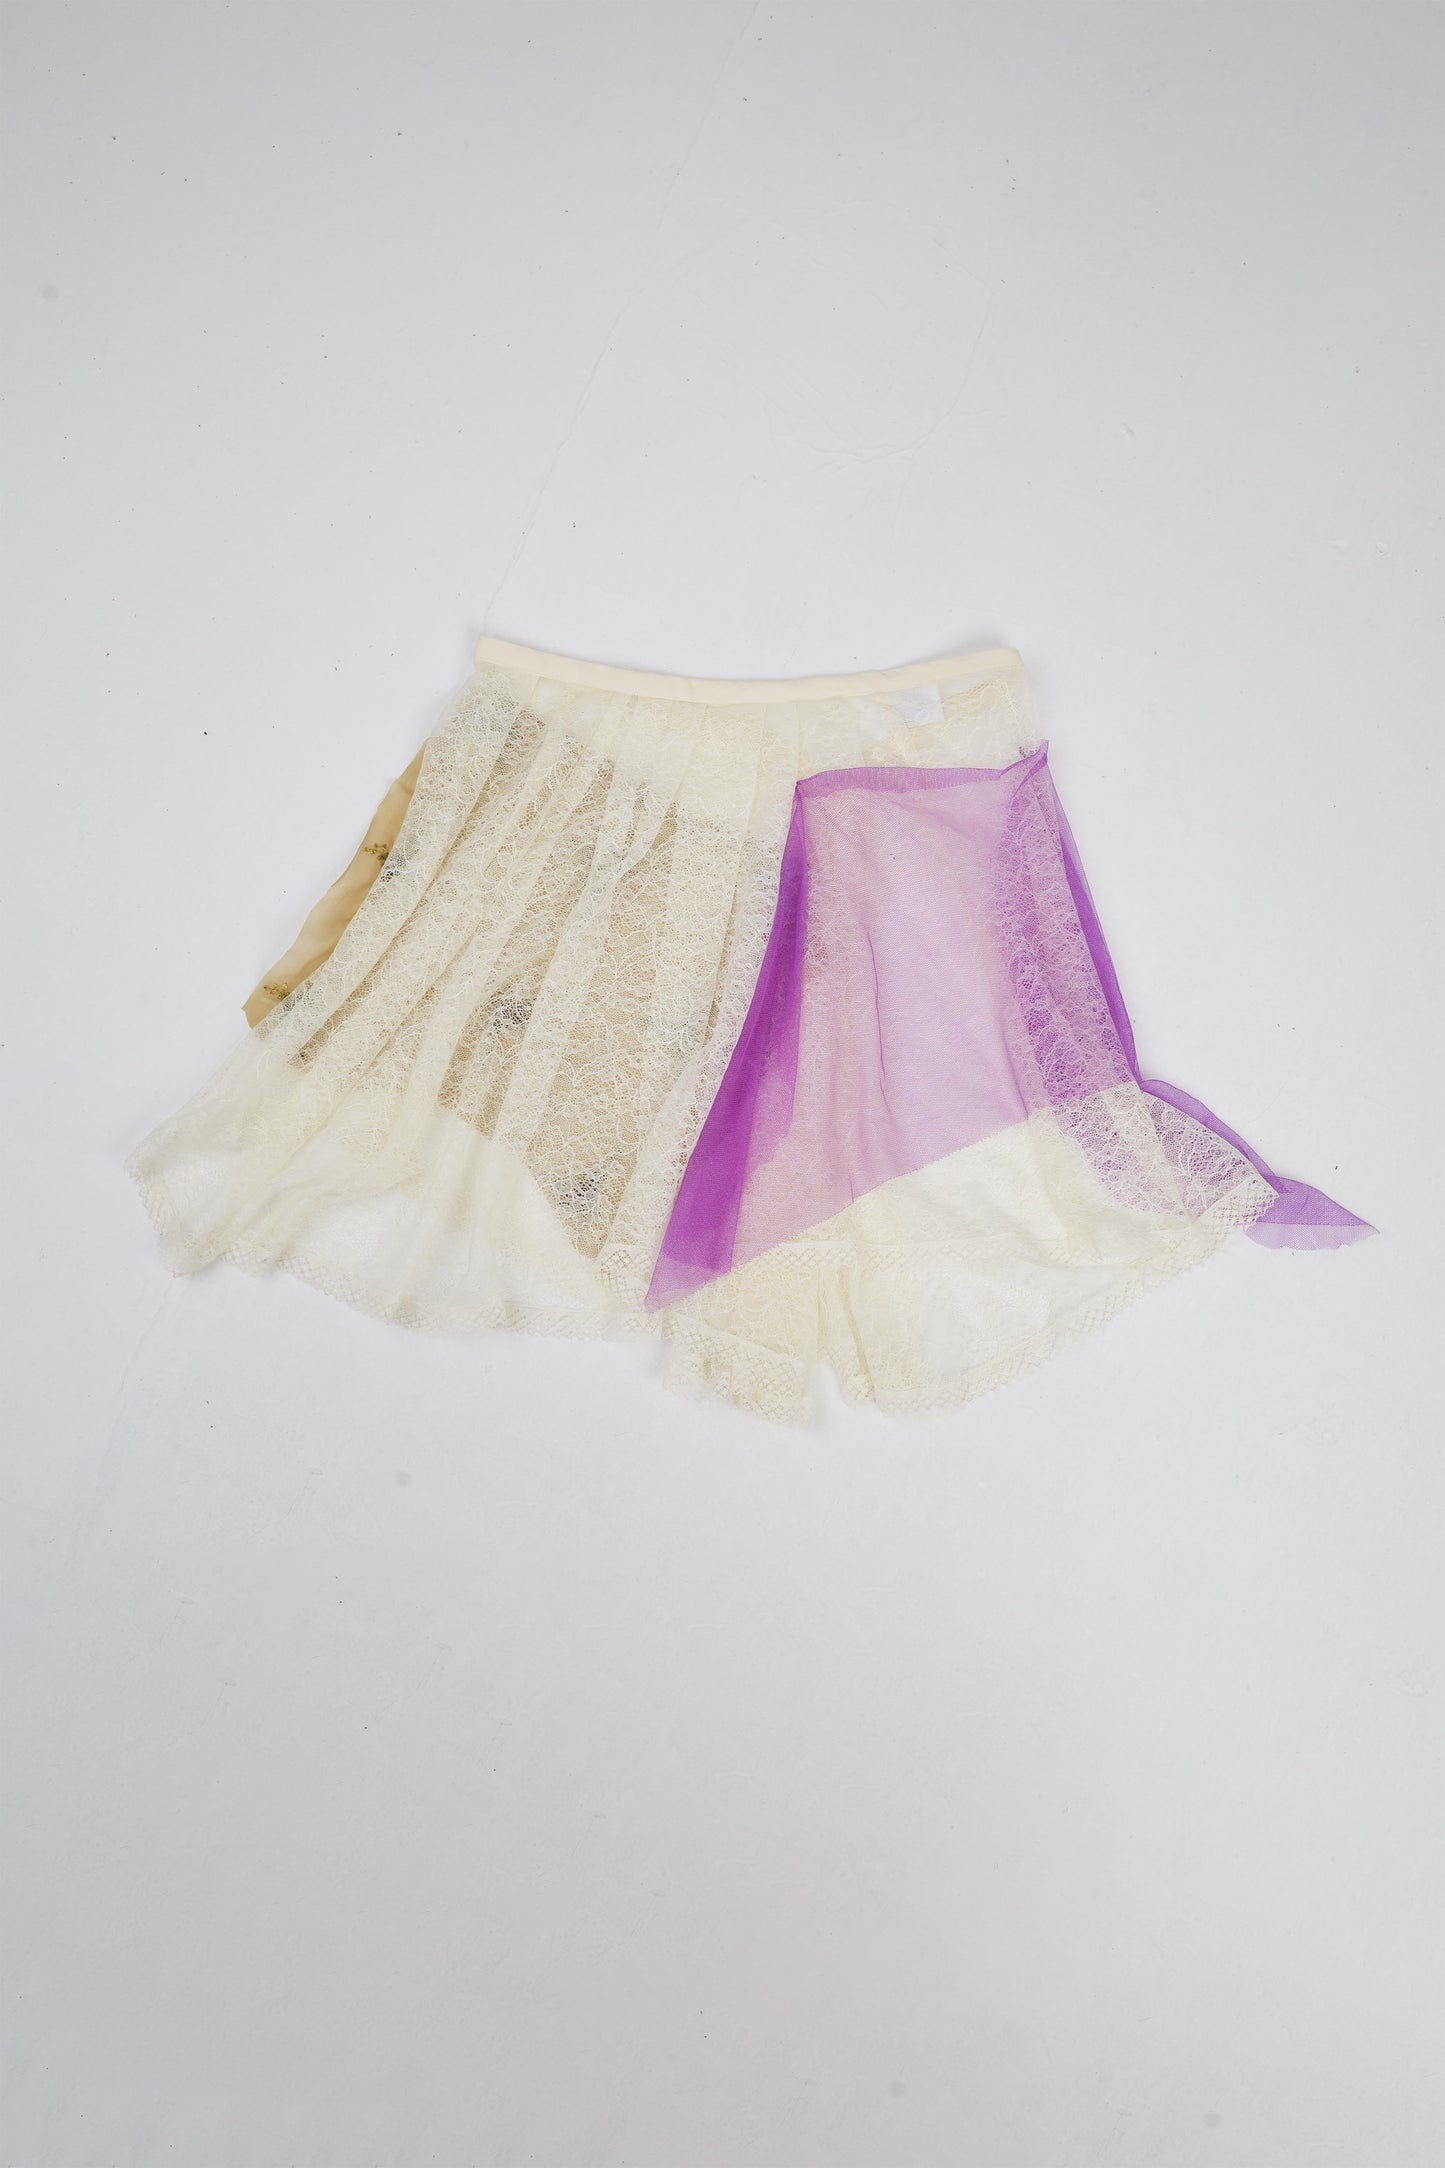 Marie Antoinette's panty